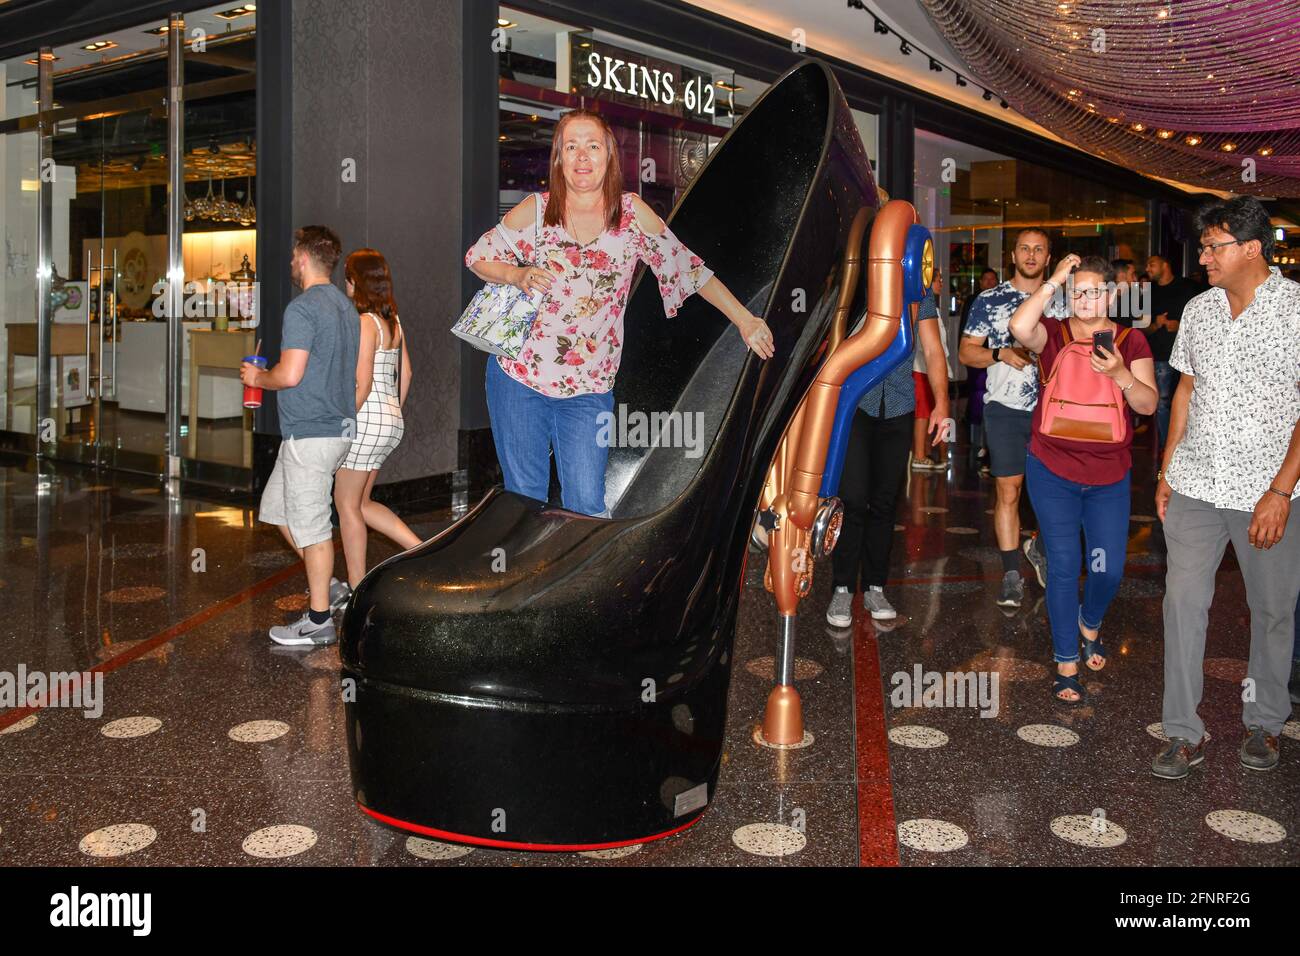 Giant high heels. The Cosmopolitan. Las Vegas, When artist …